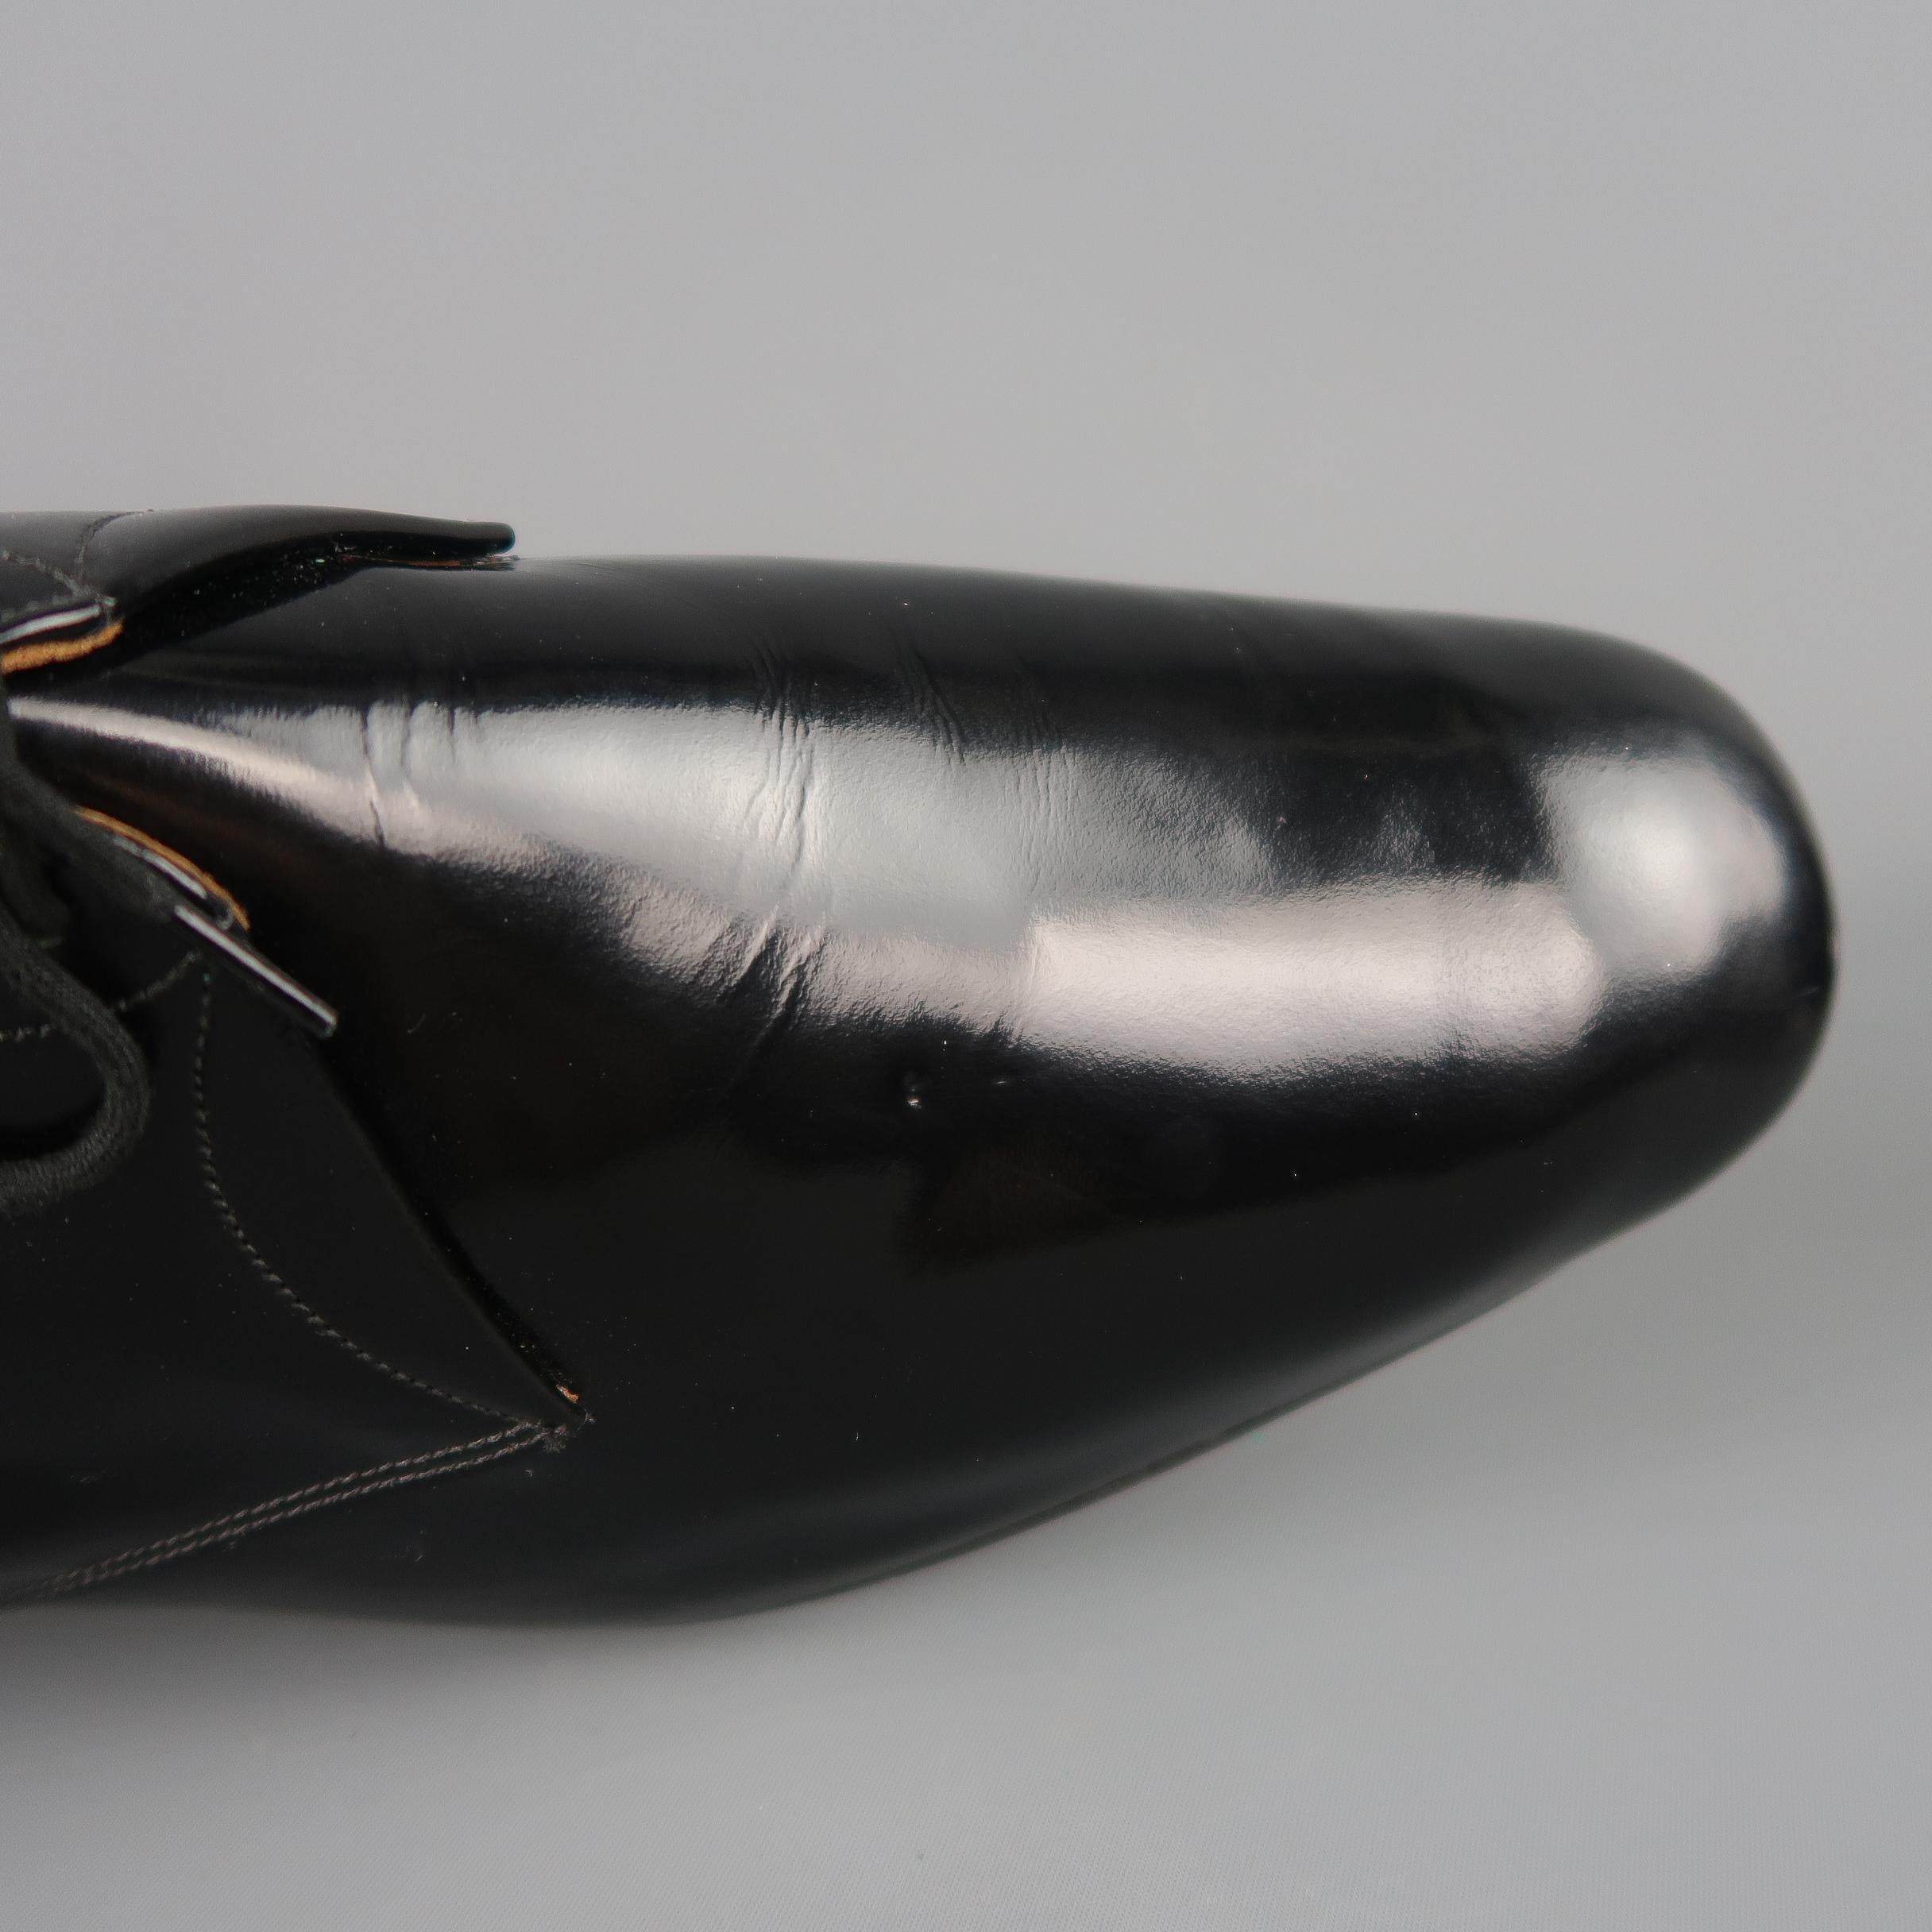 Men's Church's Dress Shoes - Black Patent Leather Lace Up Derby